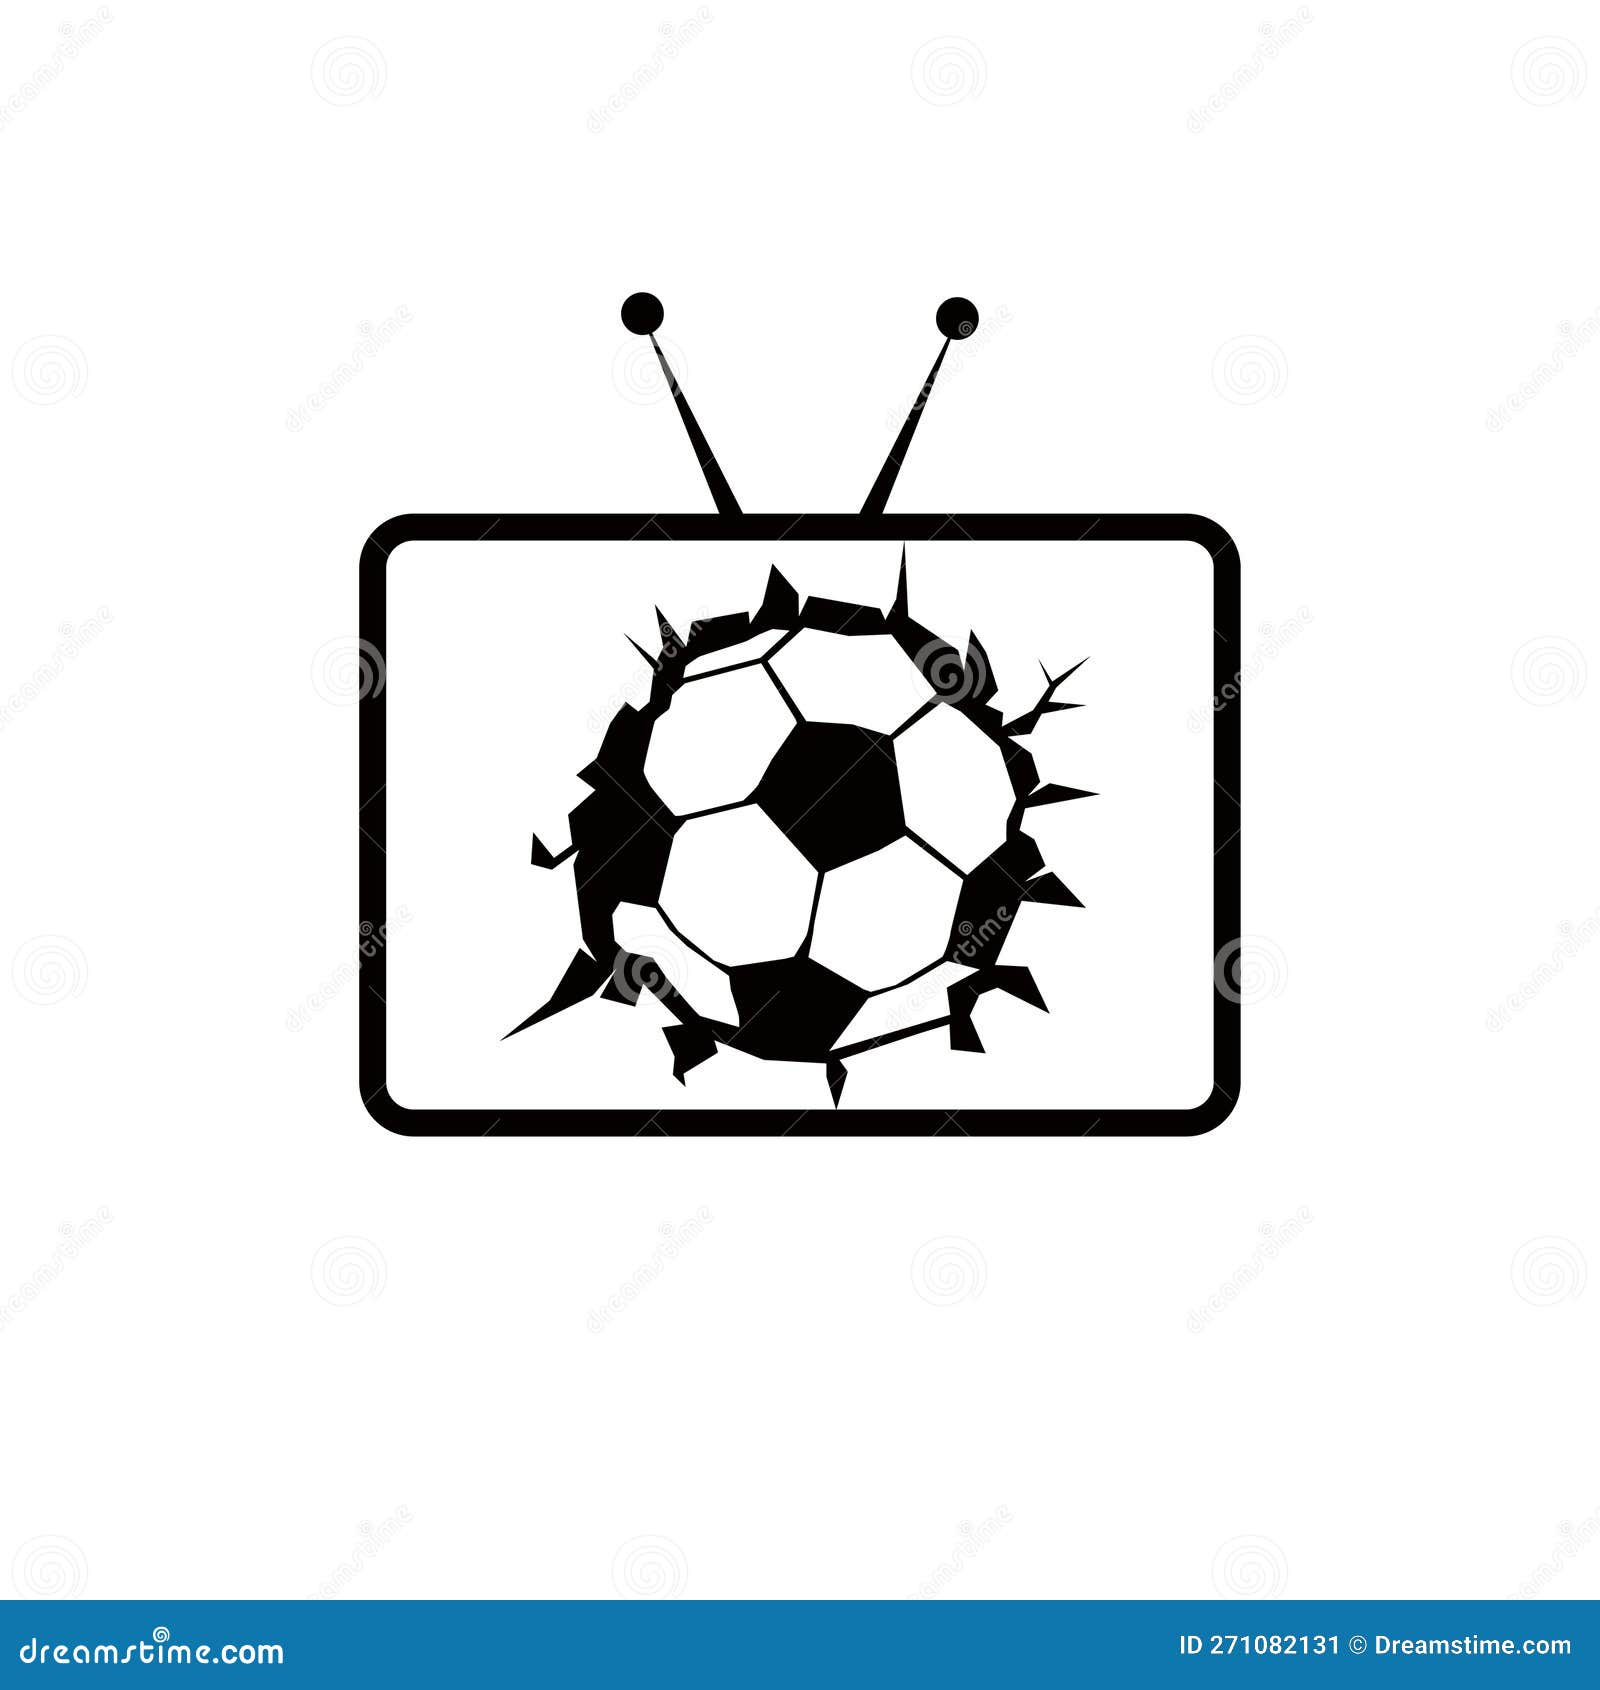 Football Game Sport Tv Channel Logo Design Stock Vector